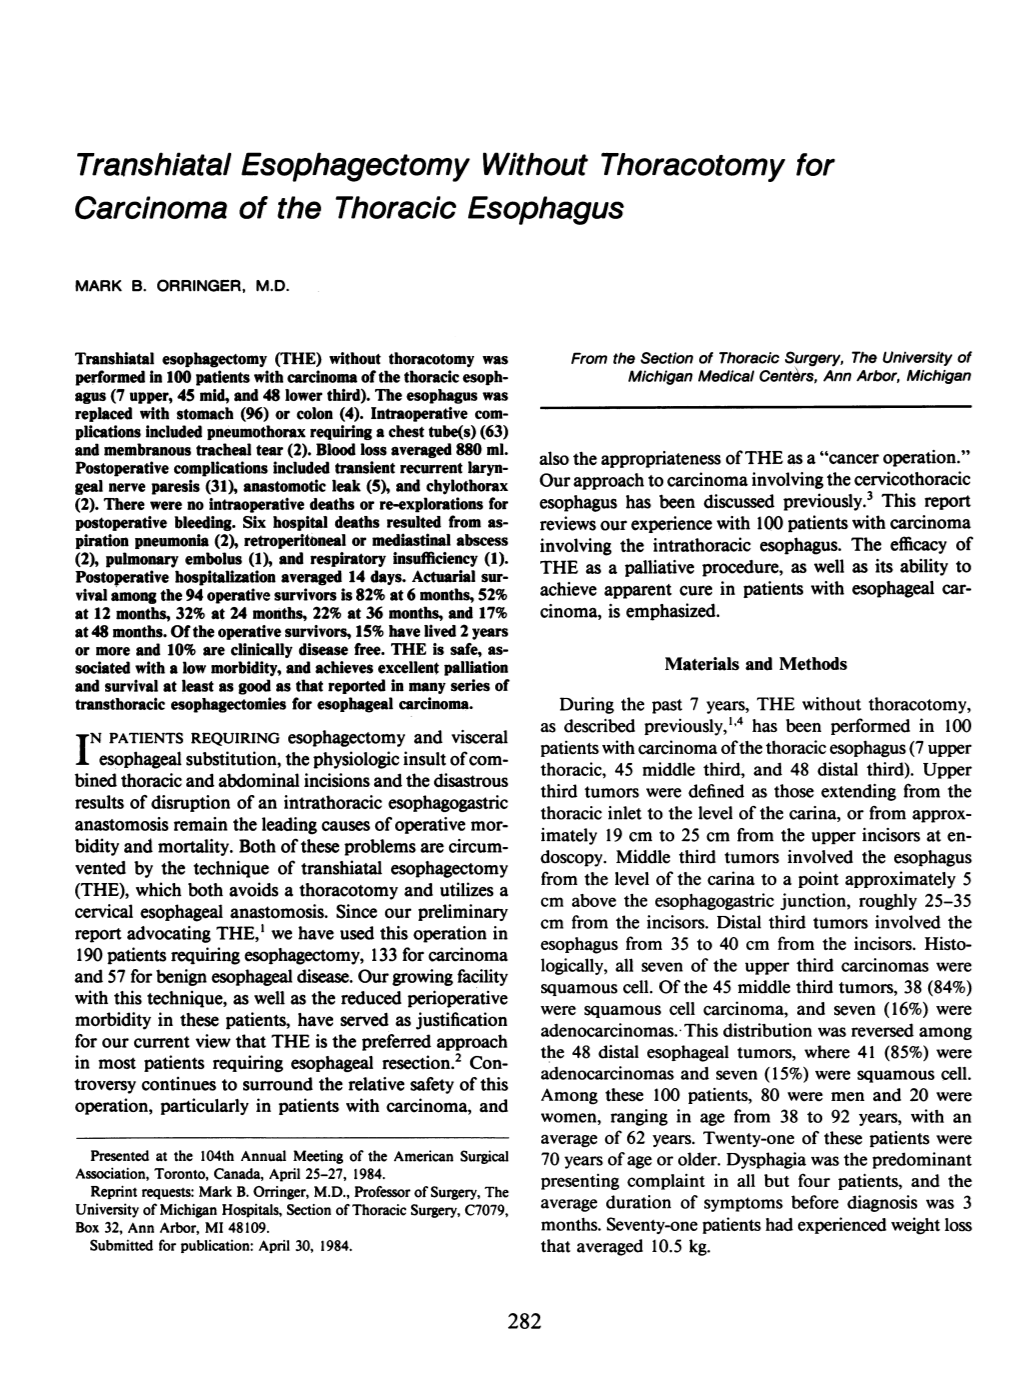 Transhiatal Esophagectomy Without Thoracotomy for Carcinoma of the Thoracic Esophagus